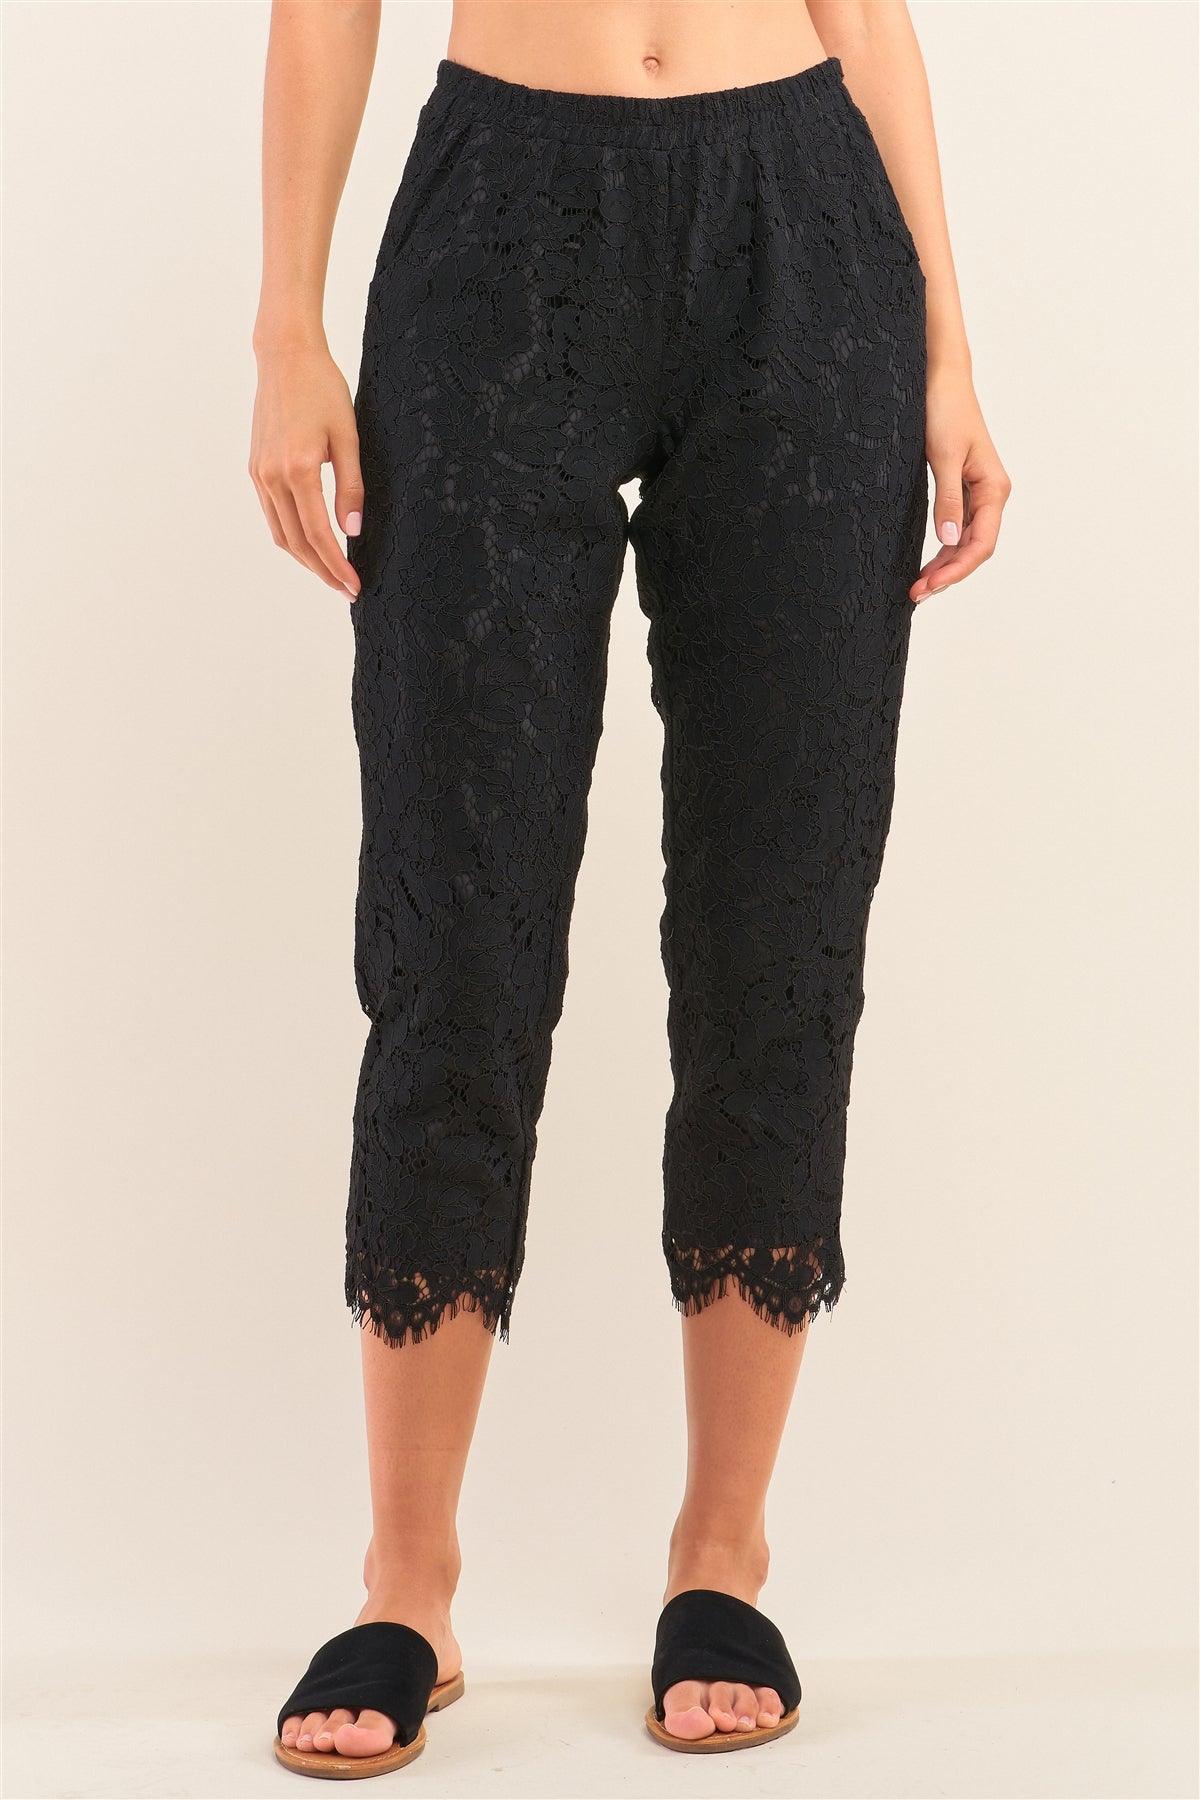 Black Mid-Rise Crochet Lace Shredded Scallop Hem Capri Pants